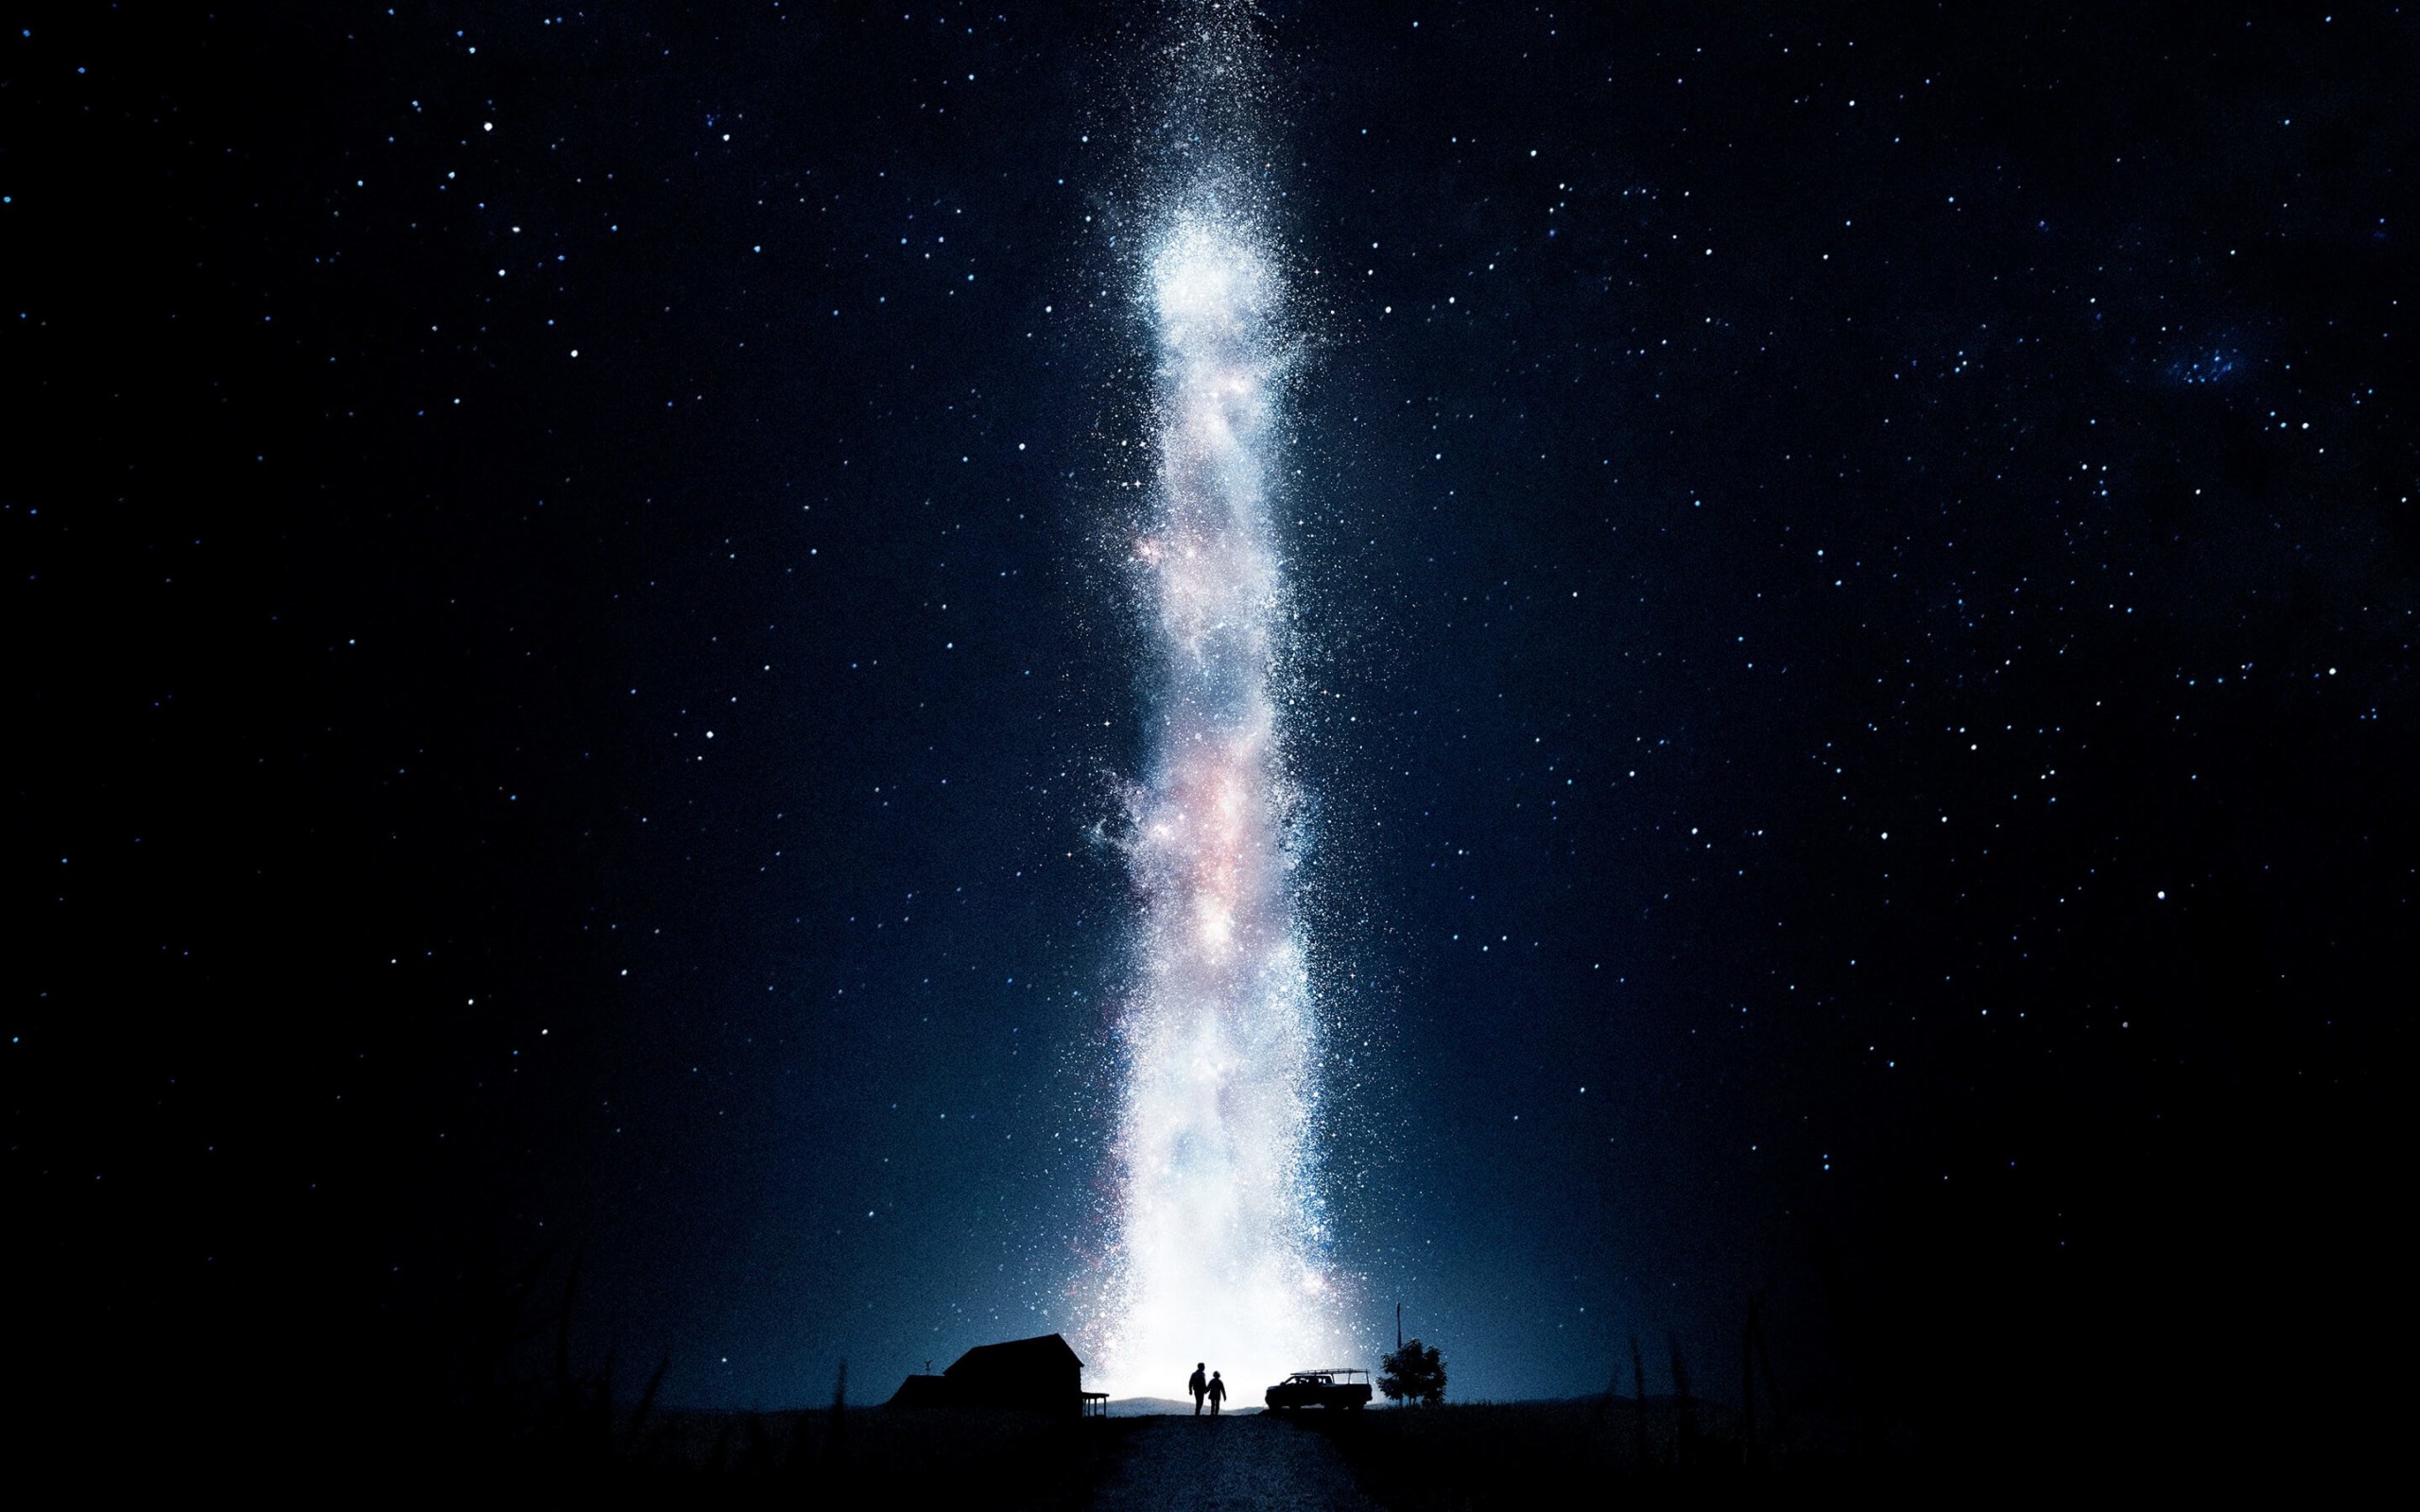 Interstellar (2014) Wallpaper for Desktop 2560x1600